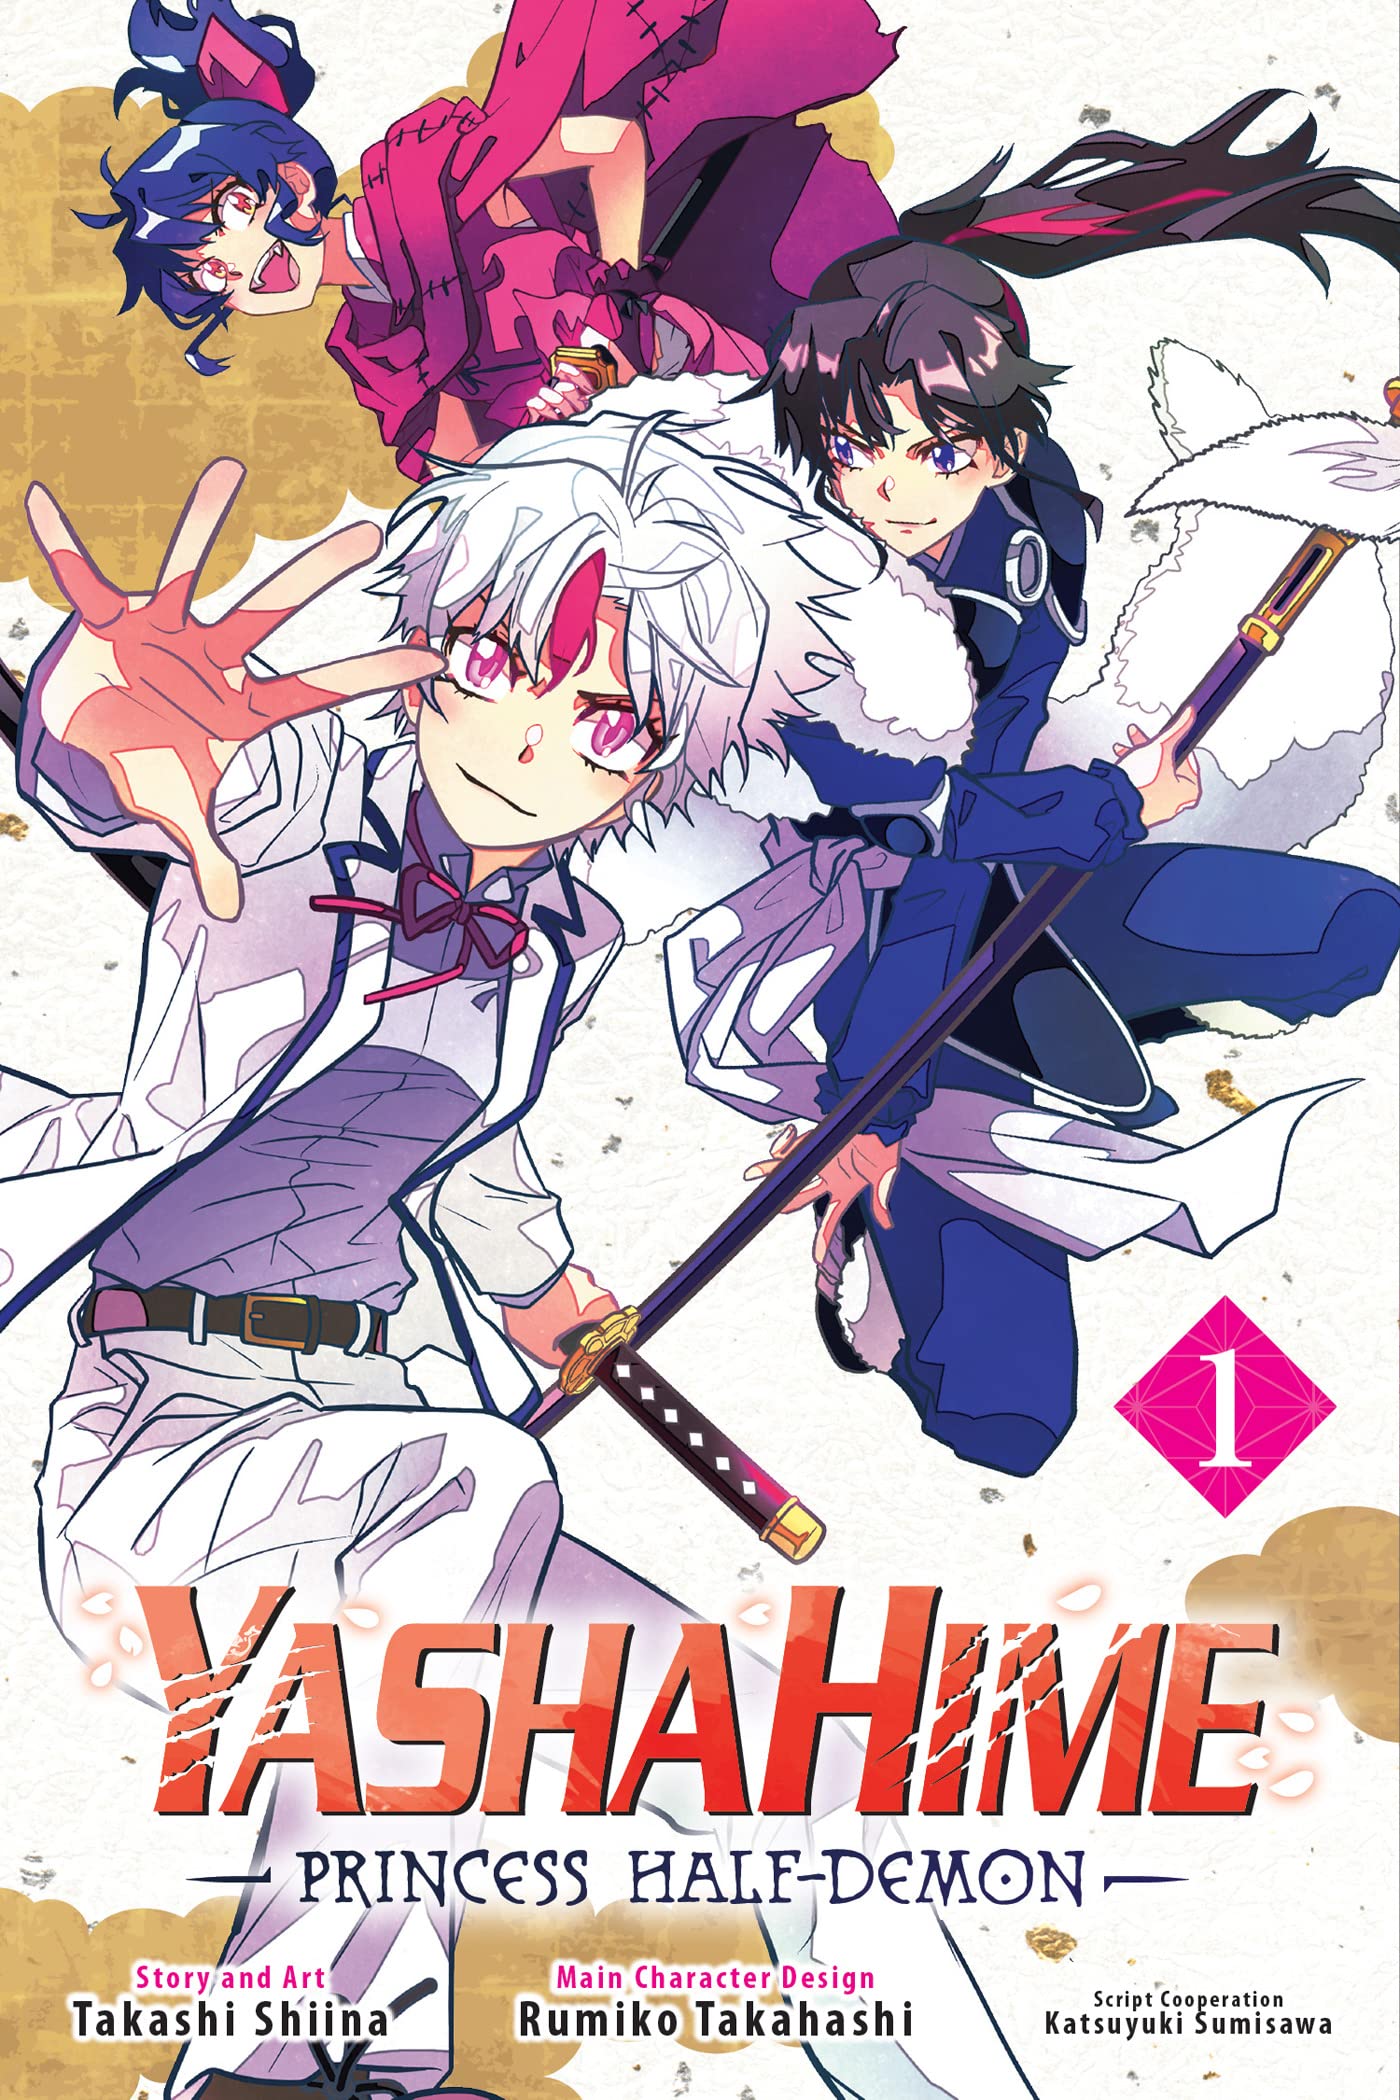 Yashahime: Princess Half-Demon Vol. 01